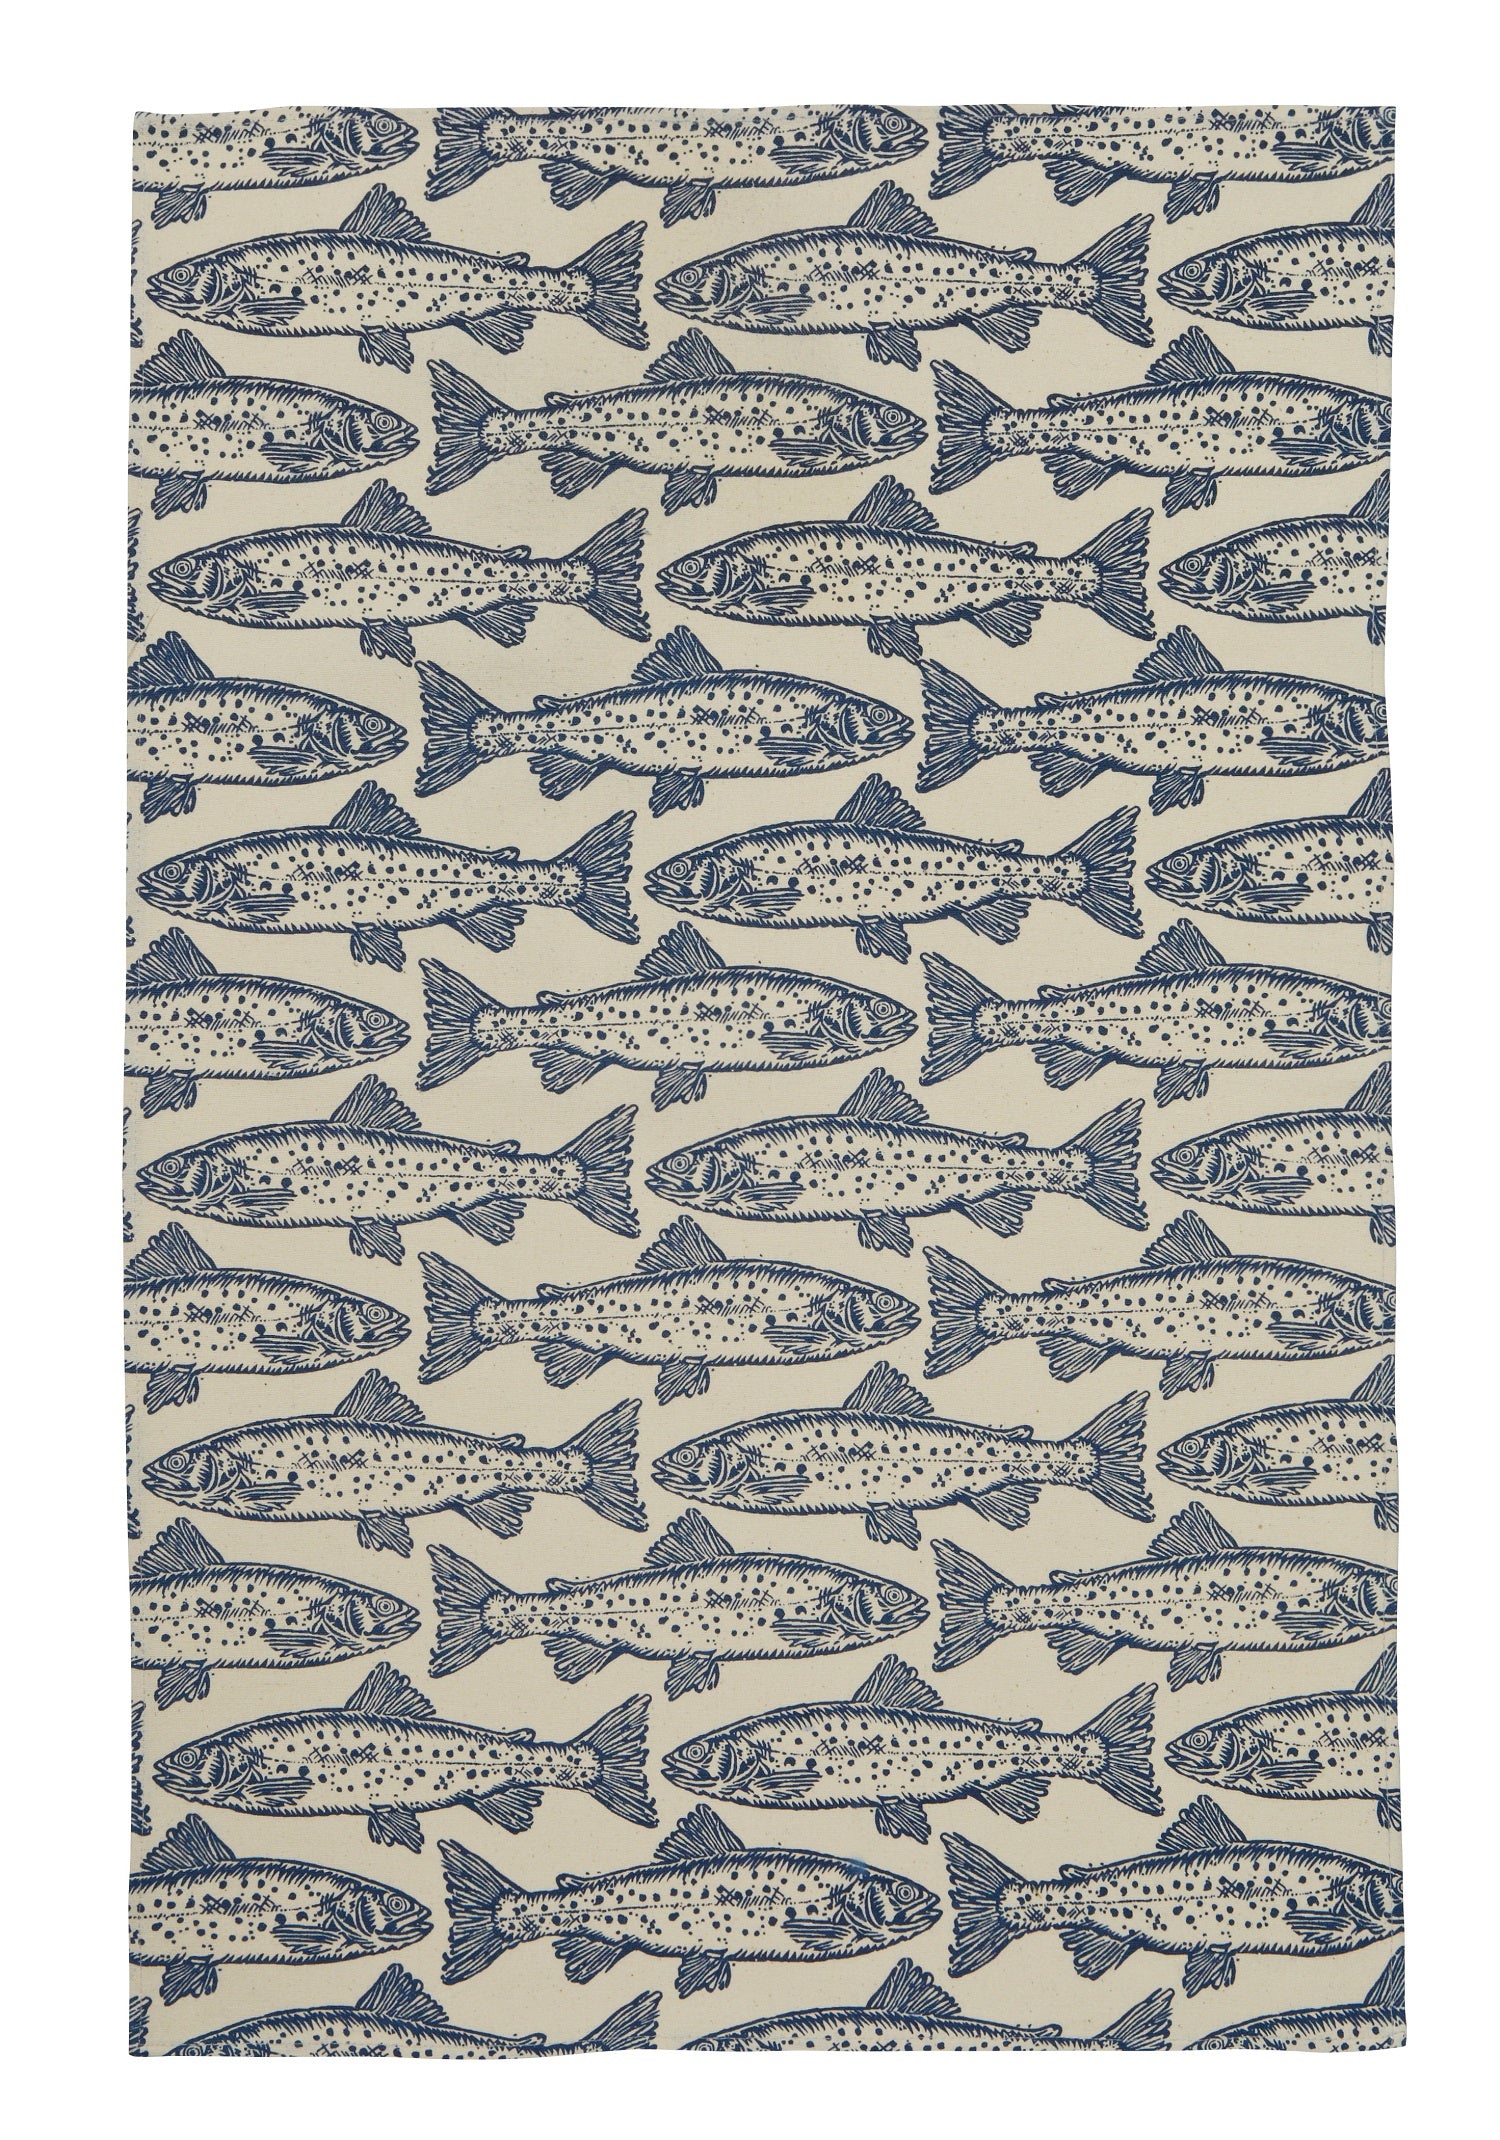 Ulster Weavers, "Salmon", Pure cotton printed tea towel - Home Landing